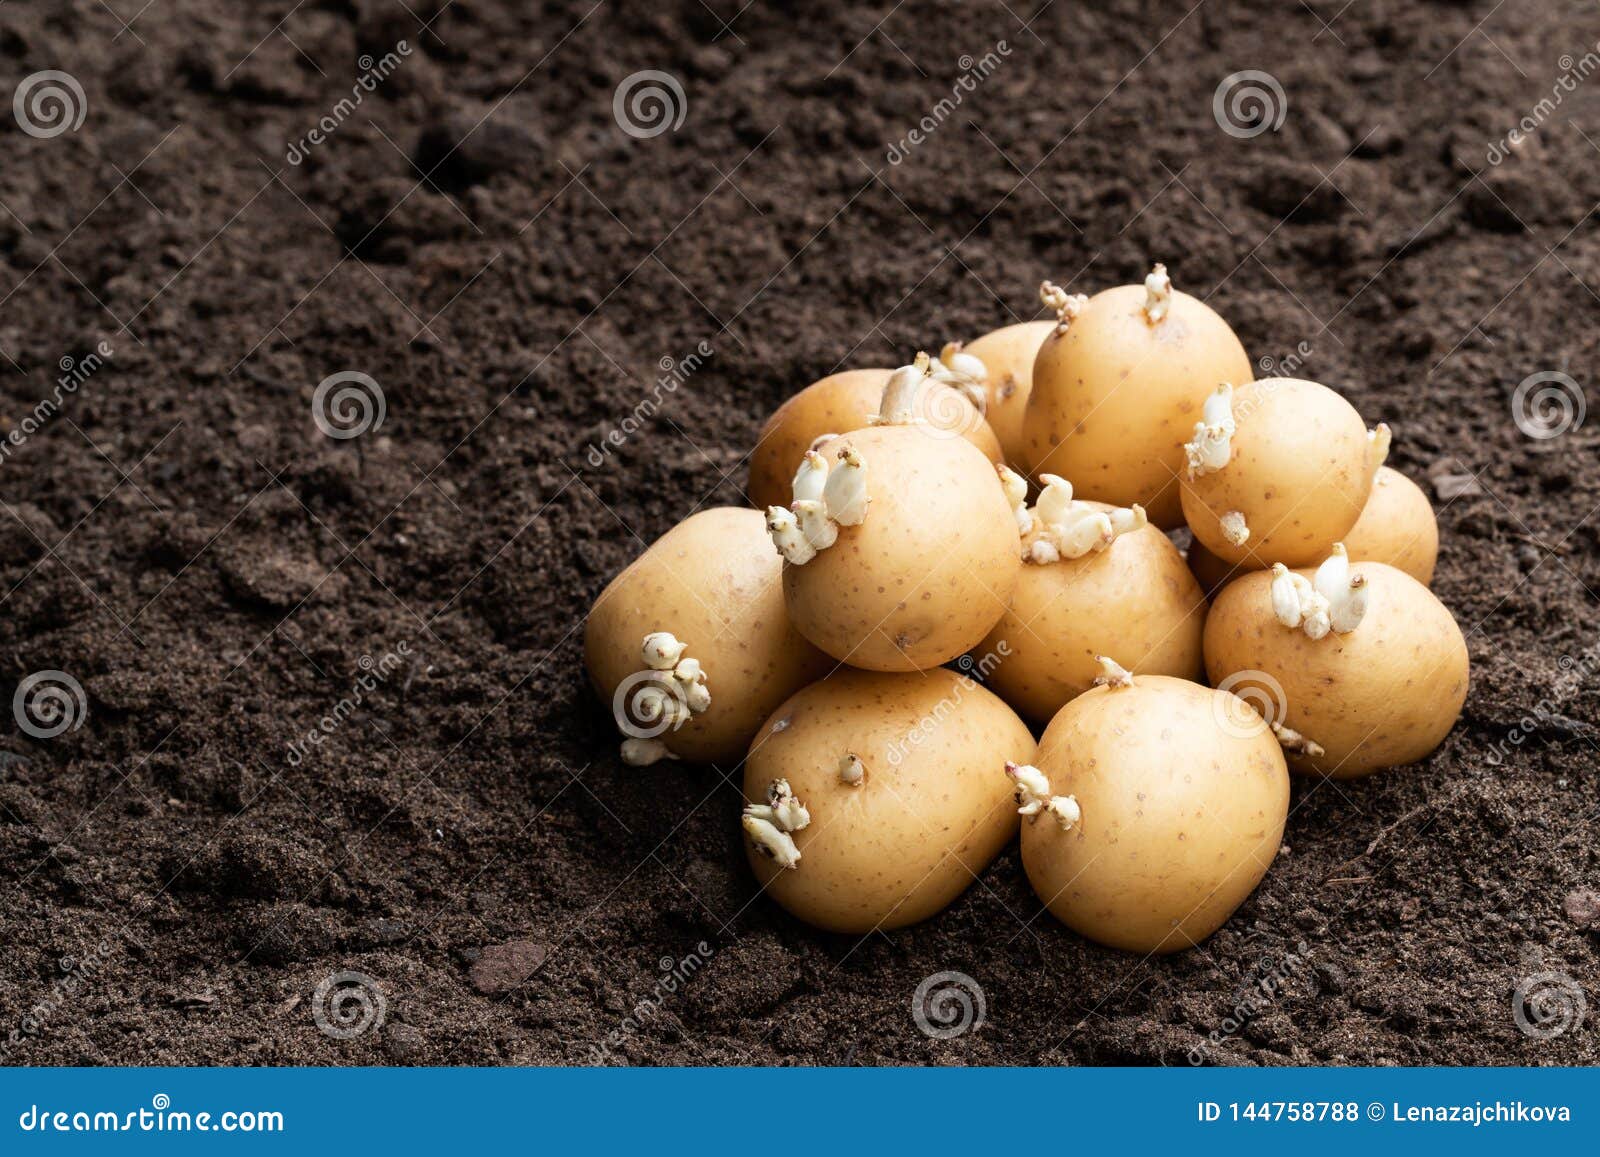 potato tubers grond planten